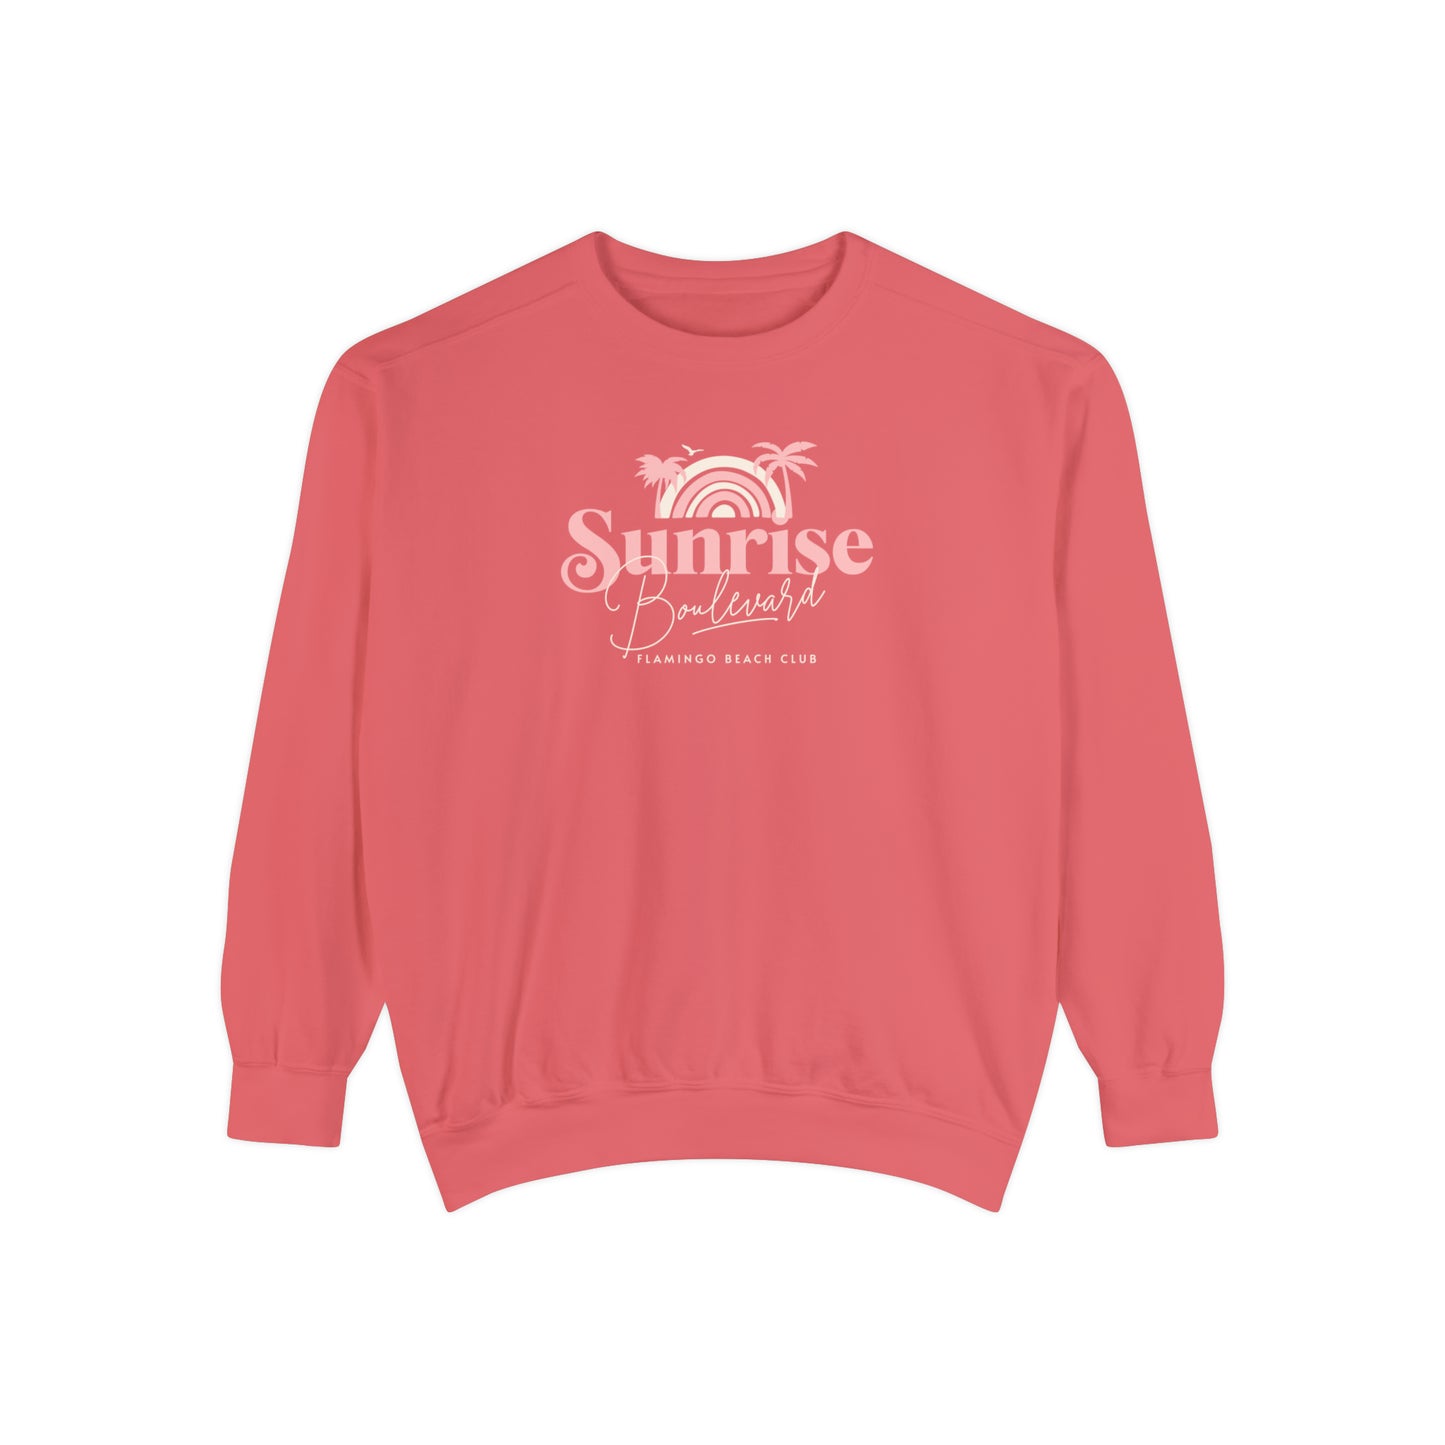 The Sunrise Boulevard Flamingo Beach Club Sweatshirt